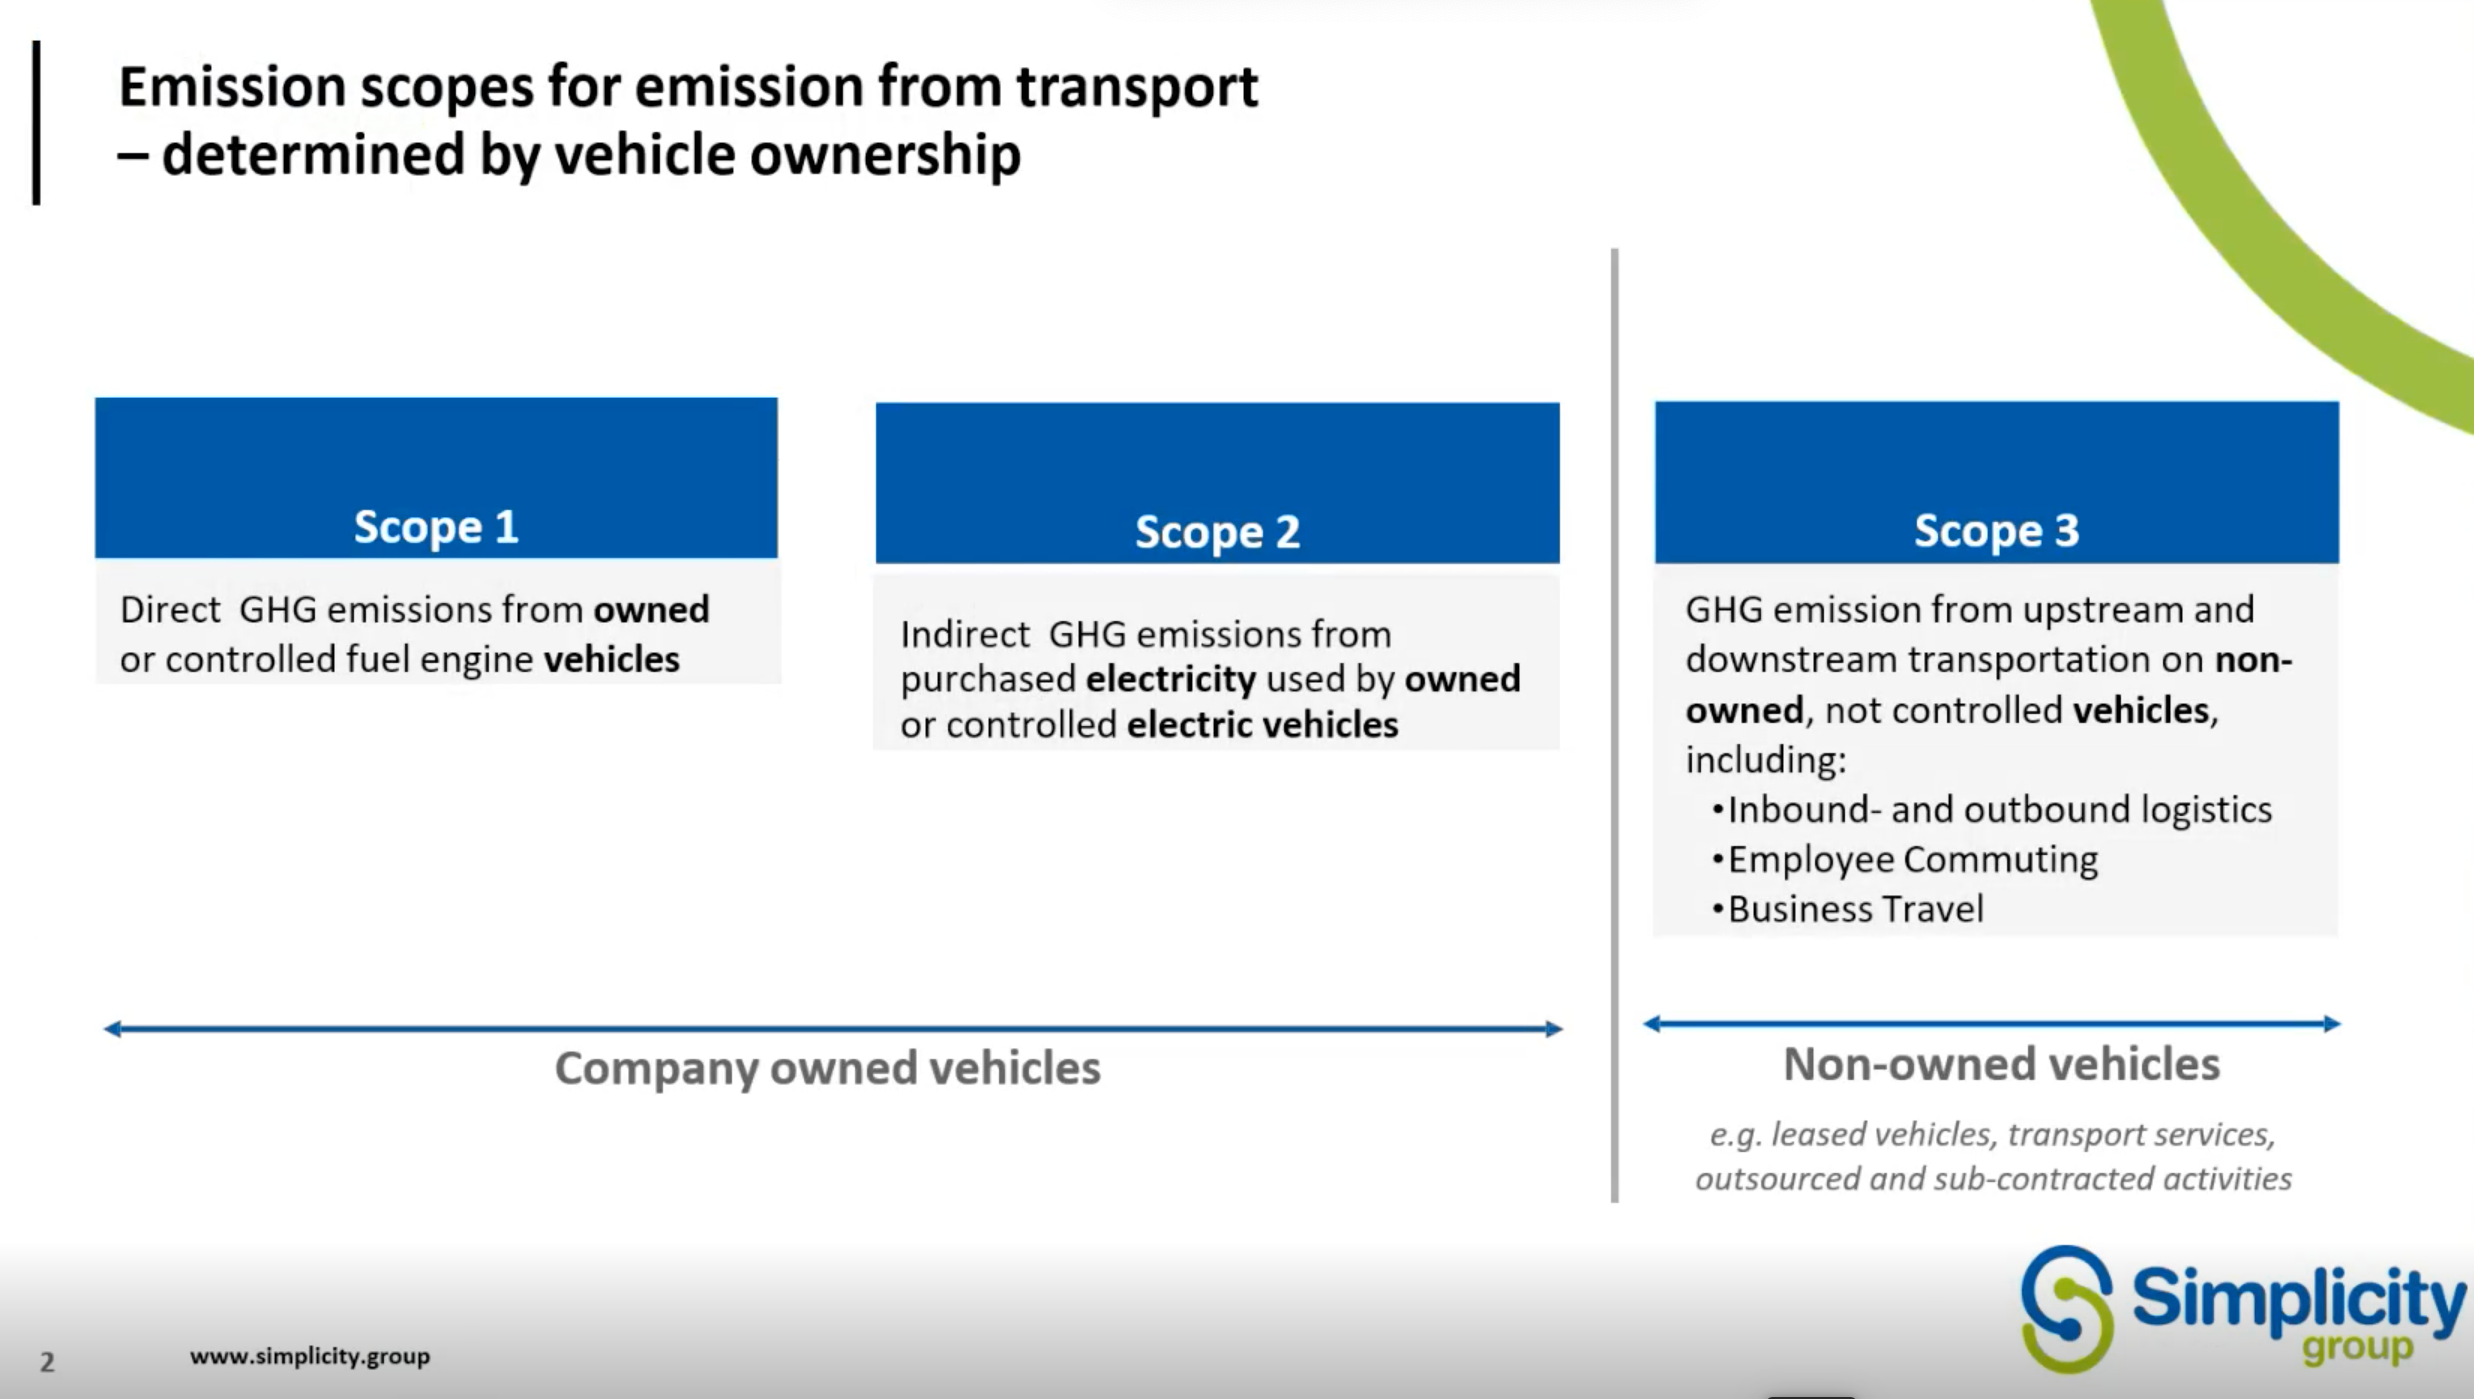 emission-scopes-transport-simplicity-group